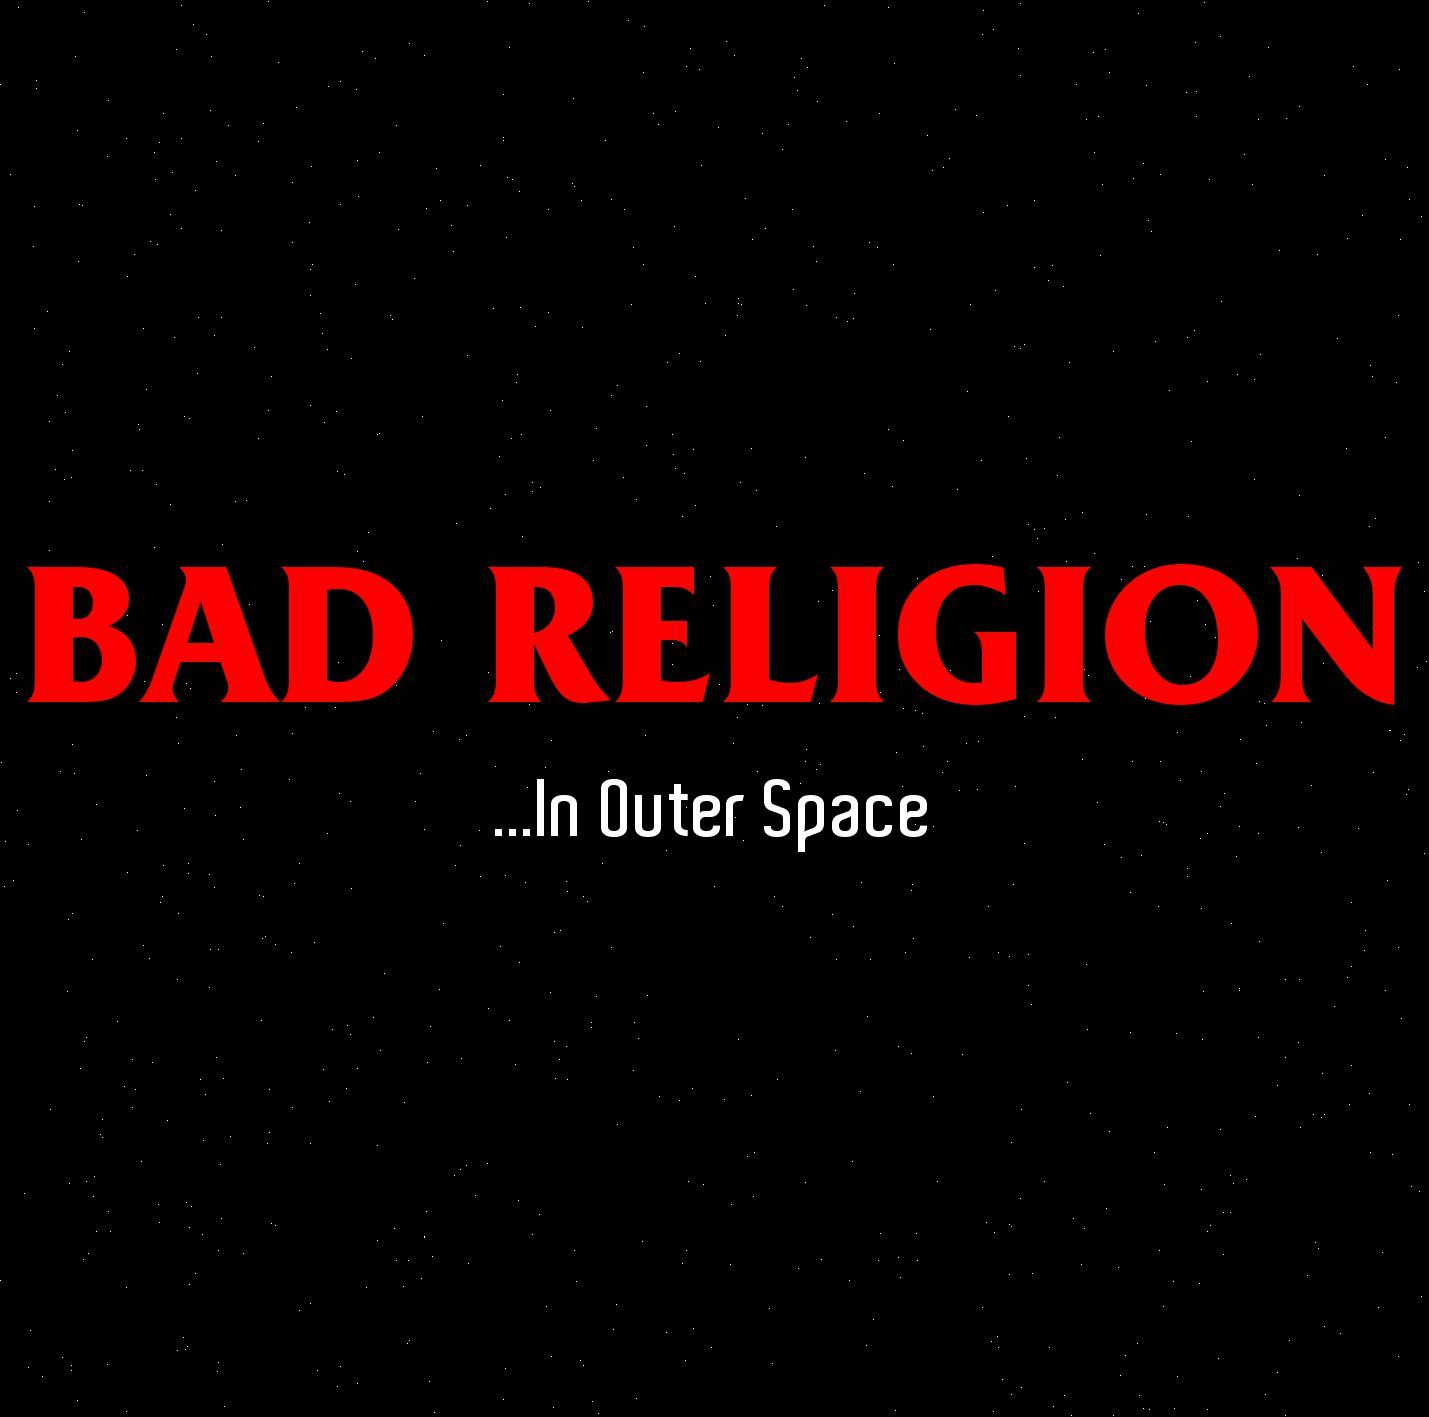 Bad Religion Wallpaper -B16 - Rock Band Wallpapers